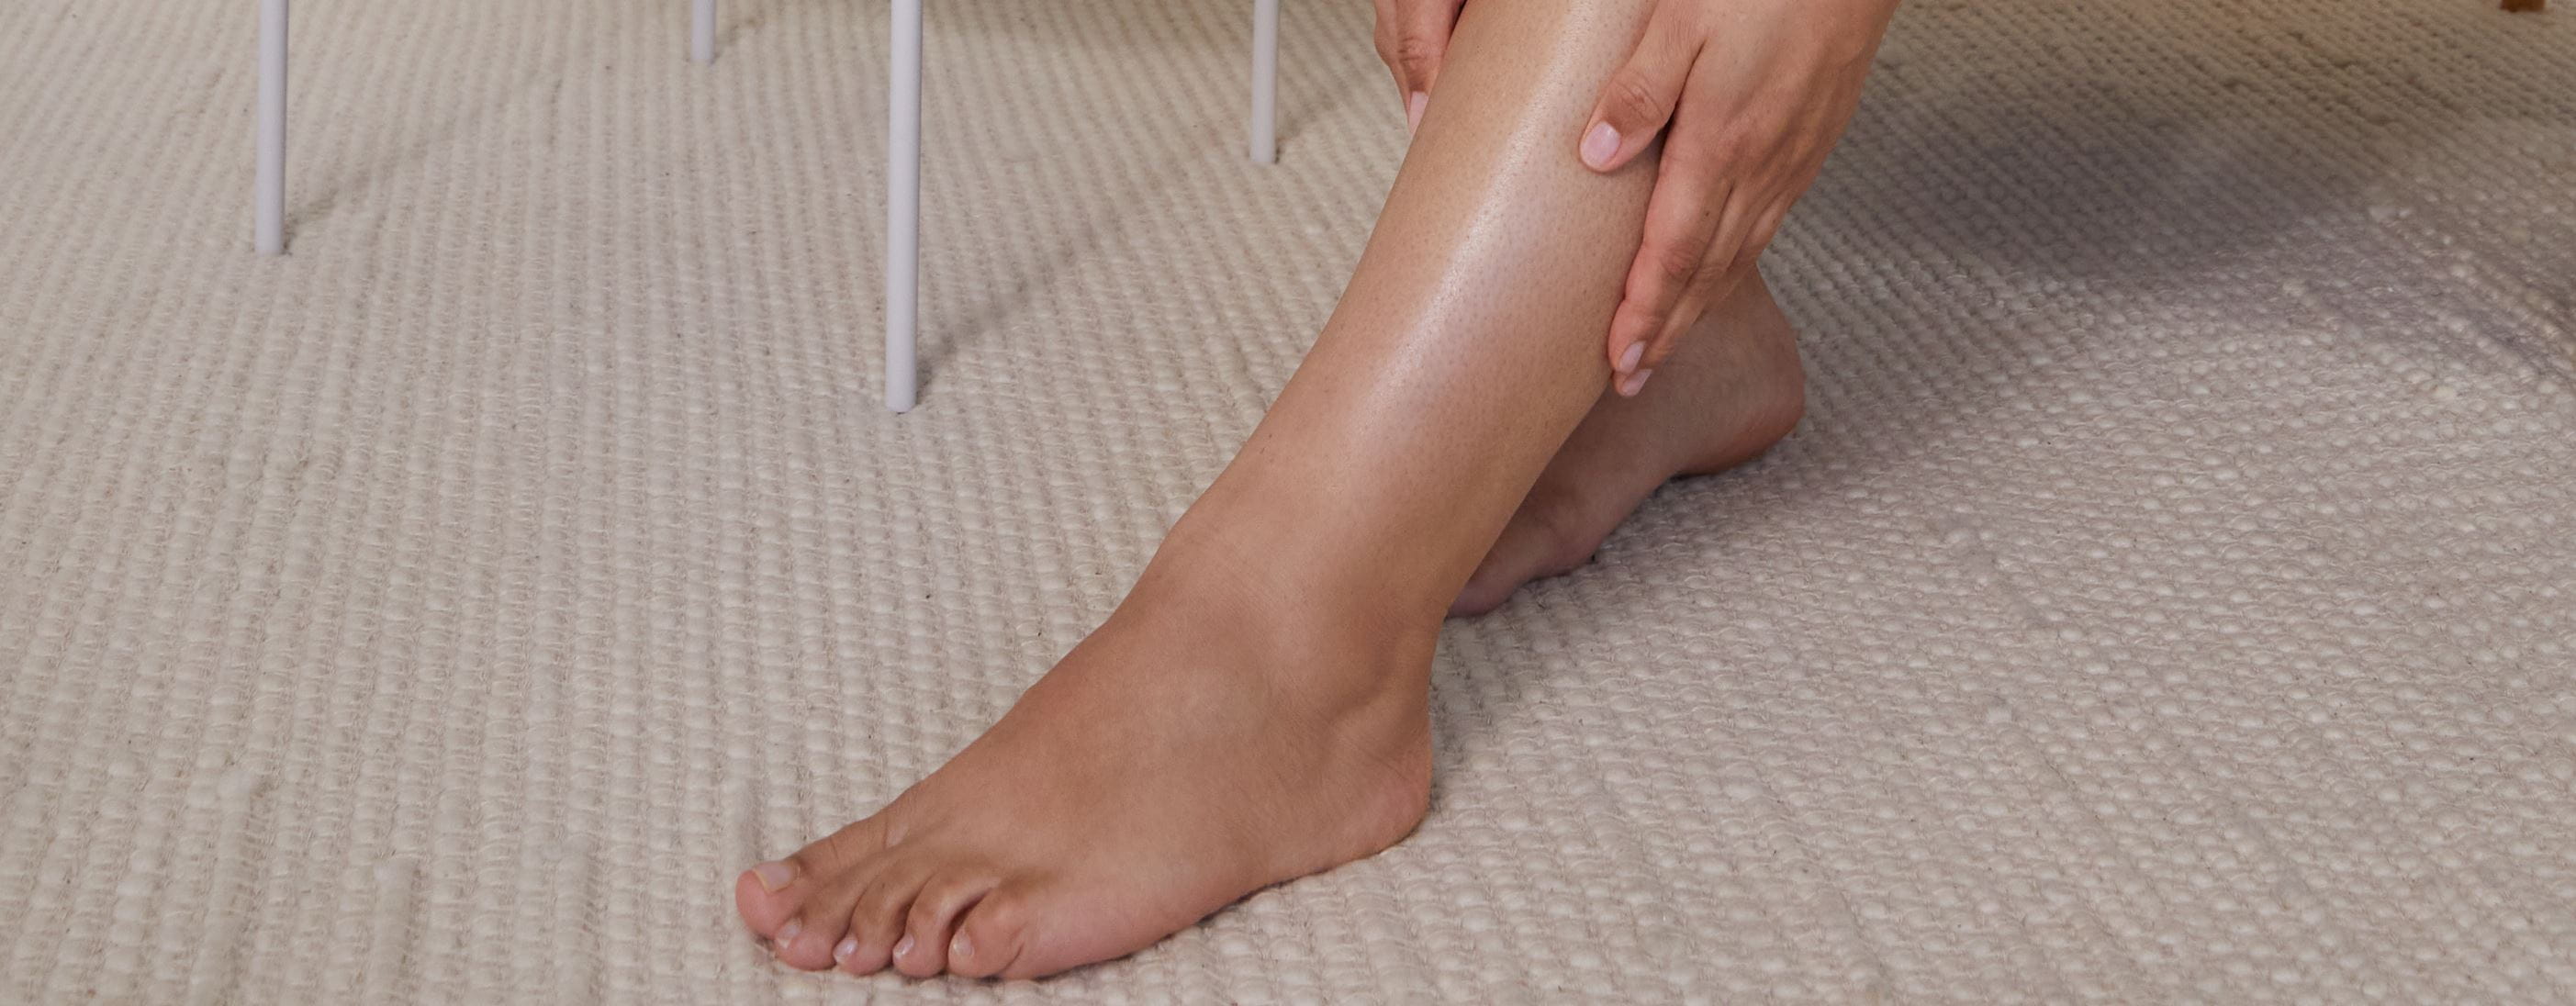 woman applying lotion to feet